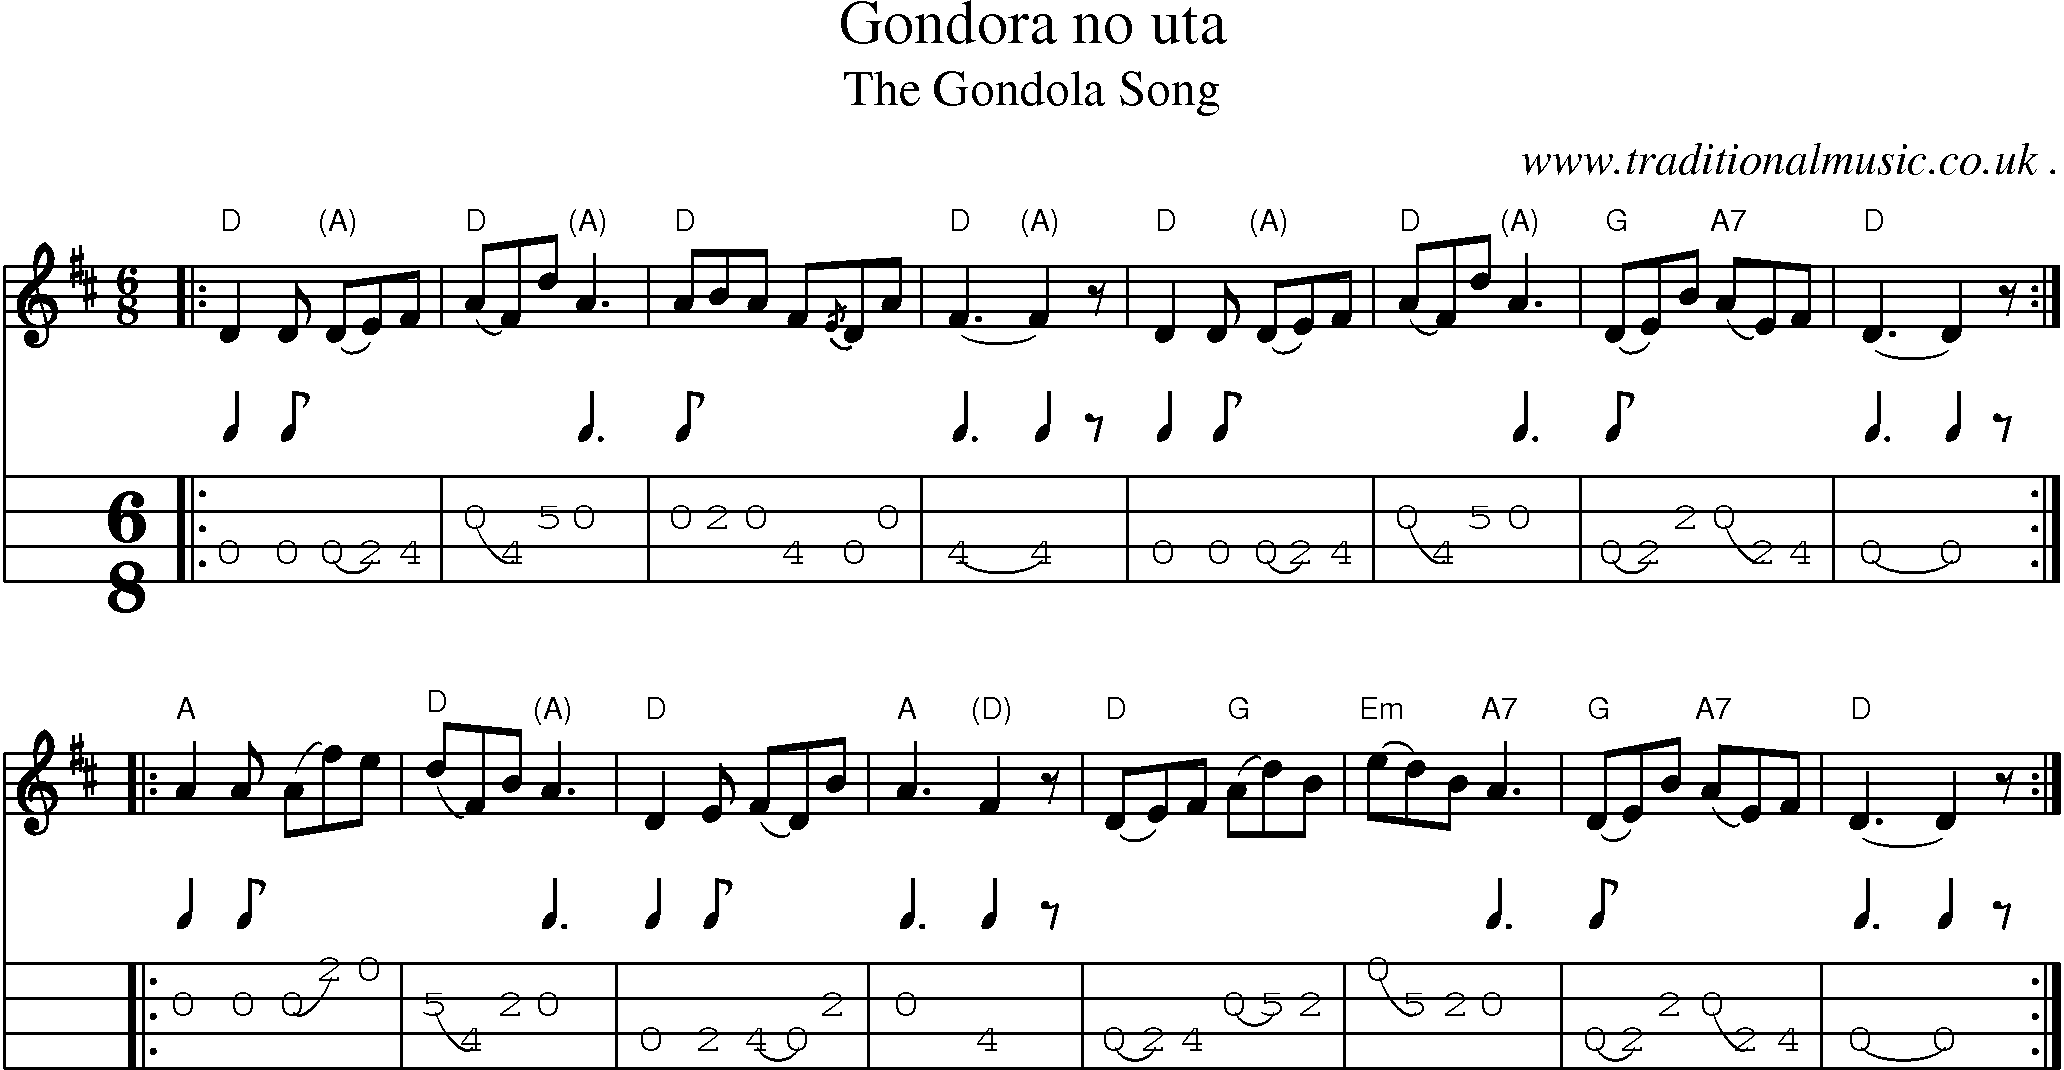 Sheet-music  score, Chords and Mandolin Tabs for Gondora No Uta